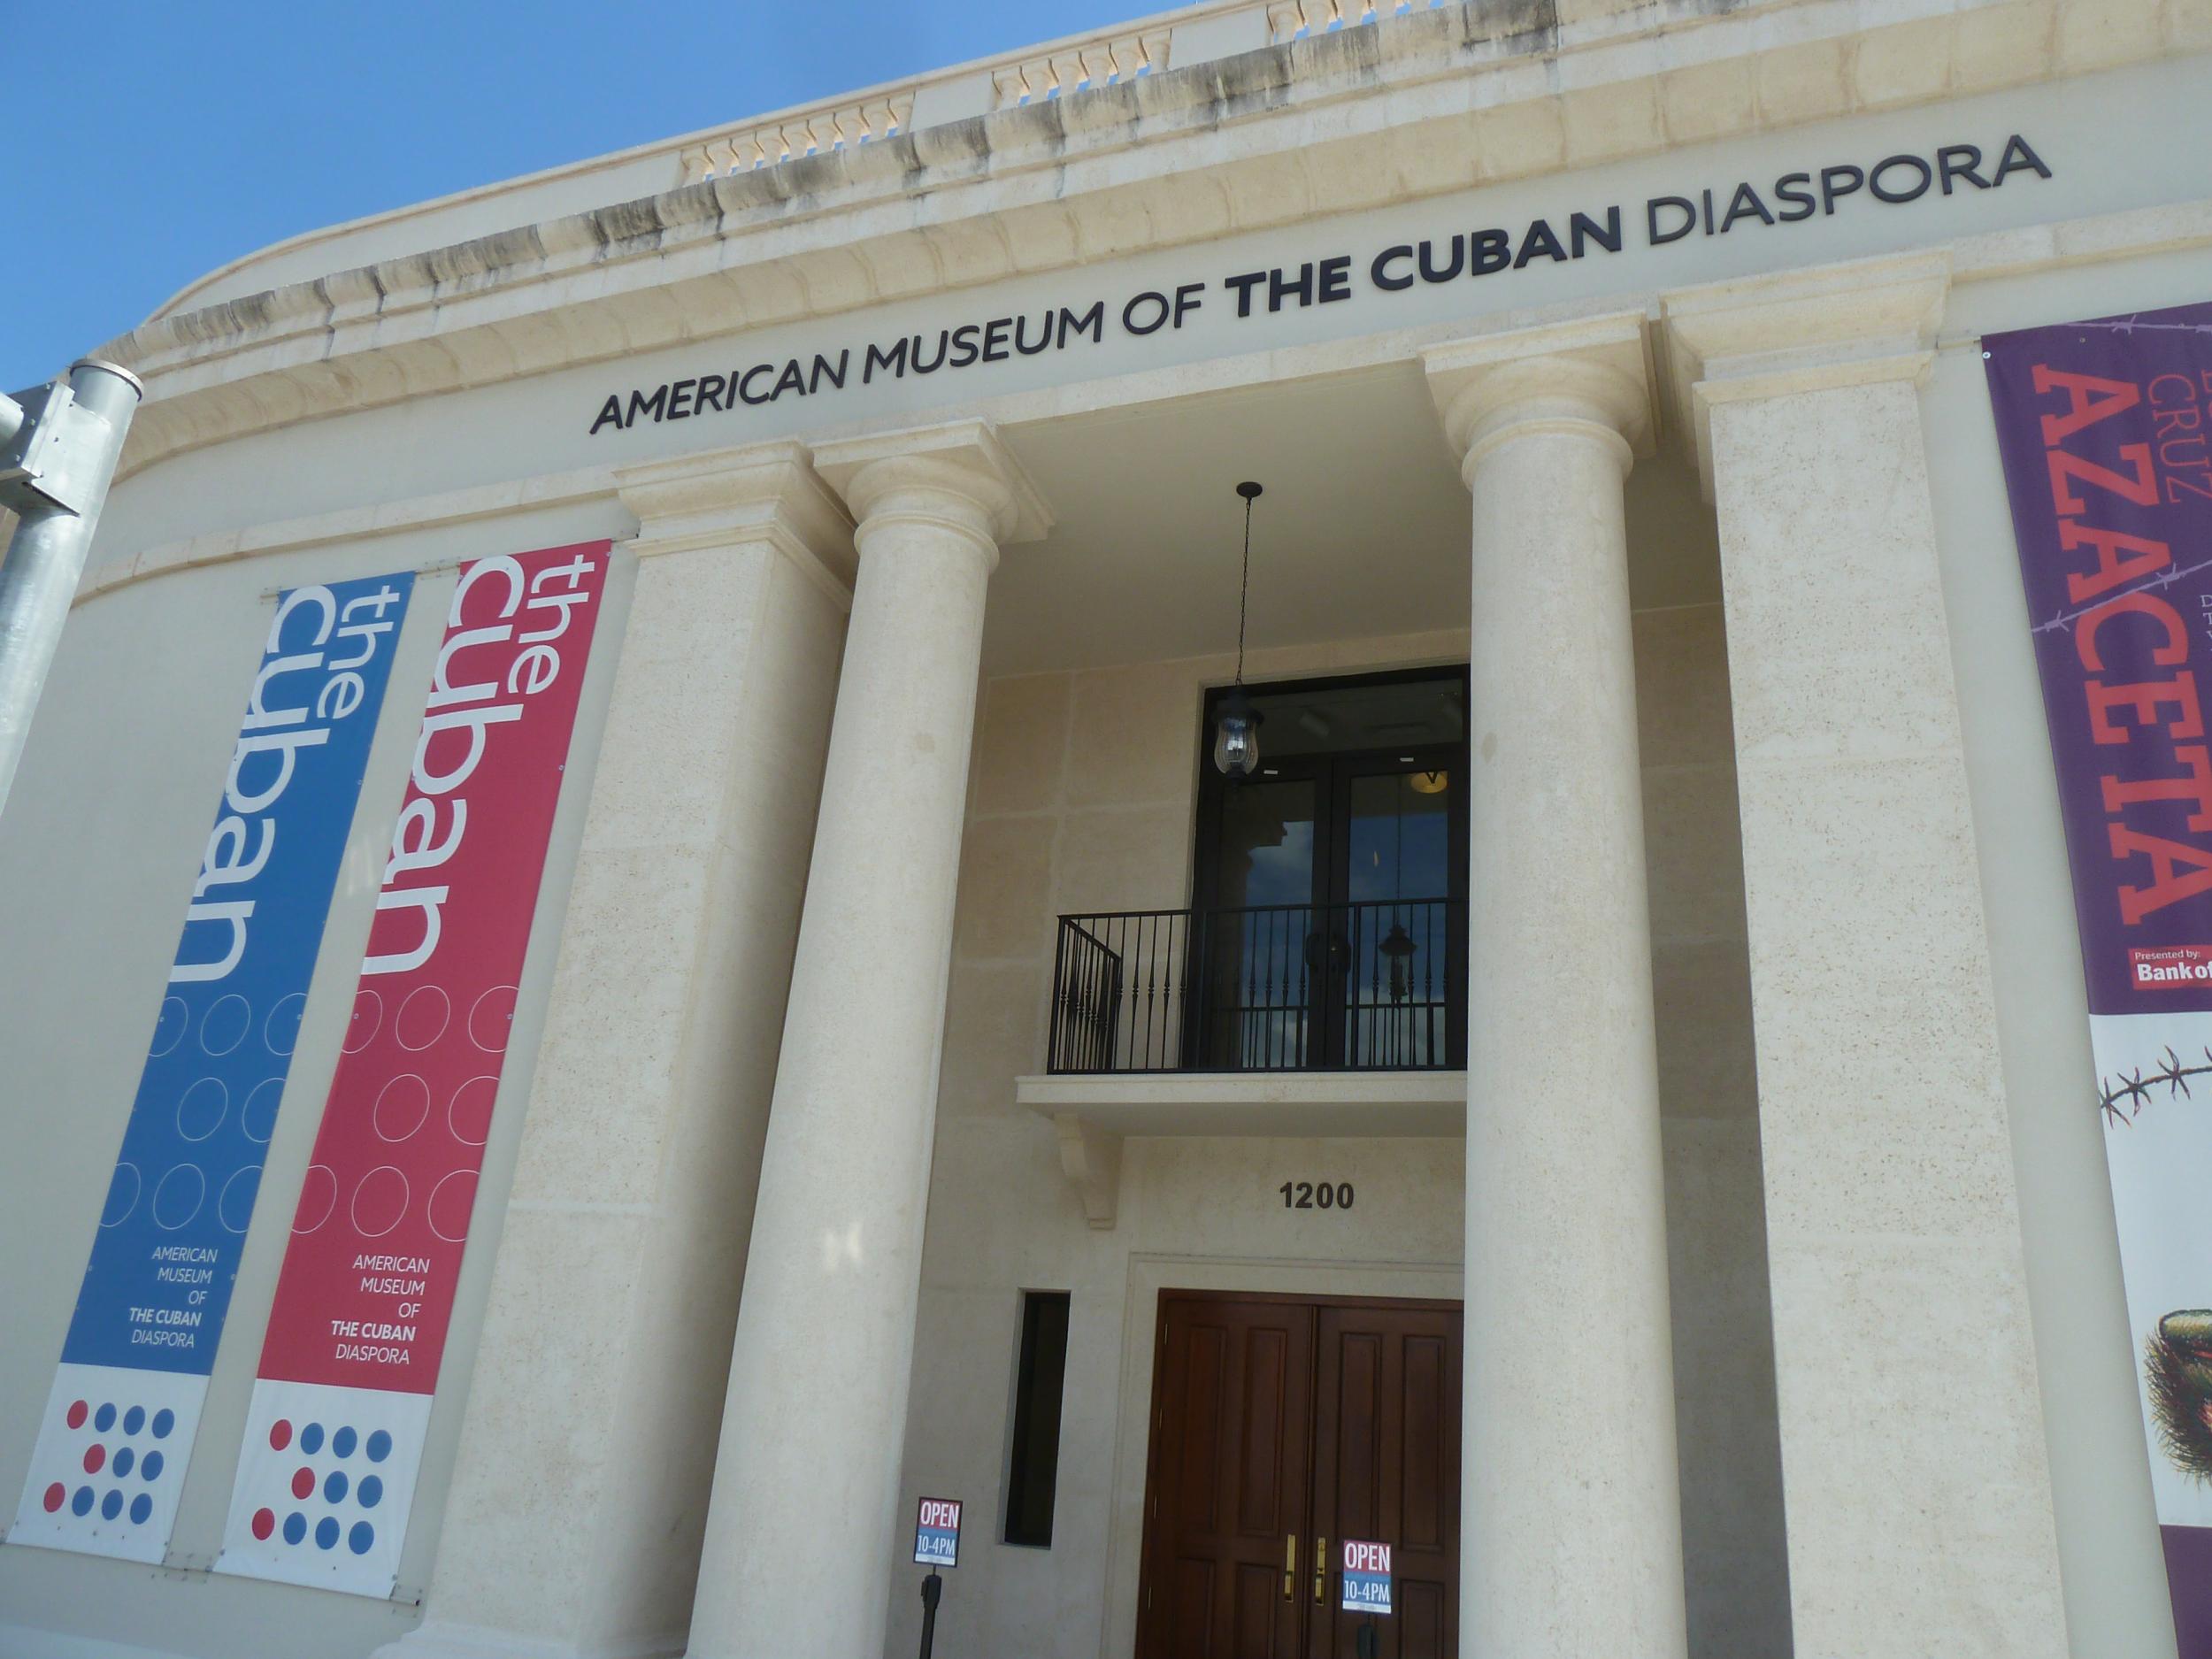 The Diaspora Museum tells the story of Cuban migration